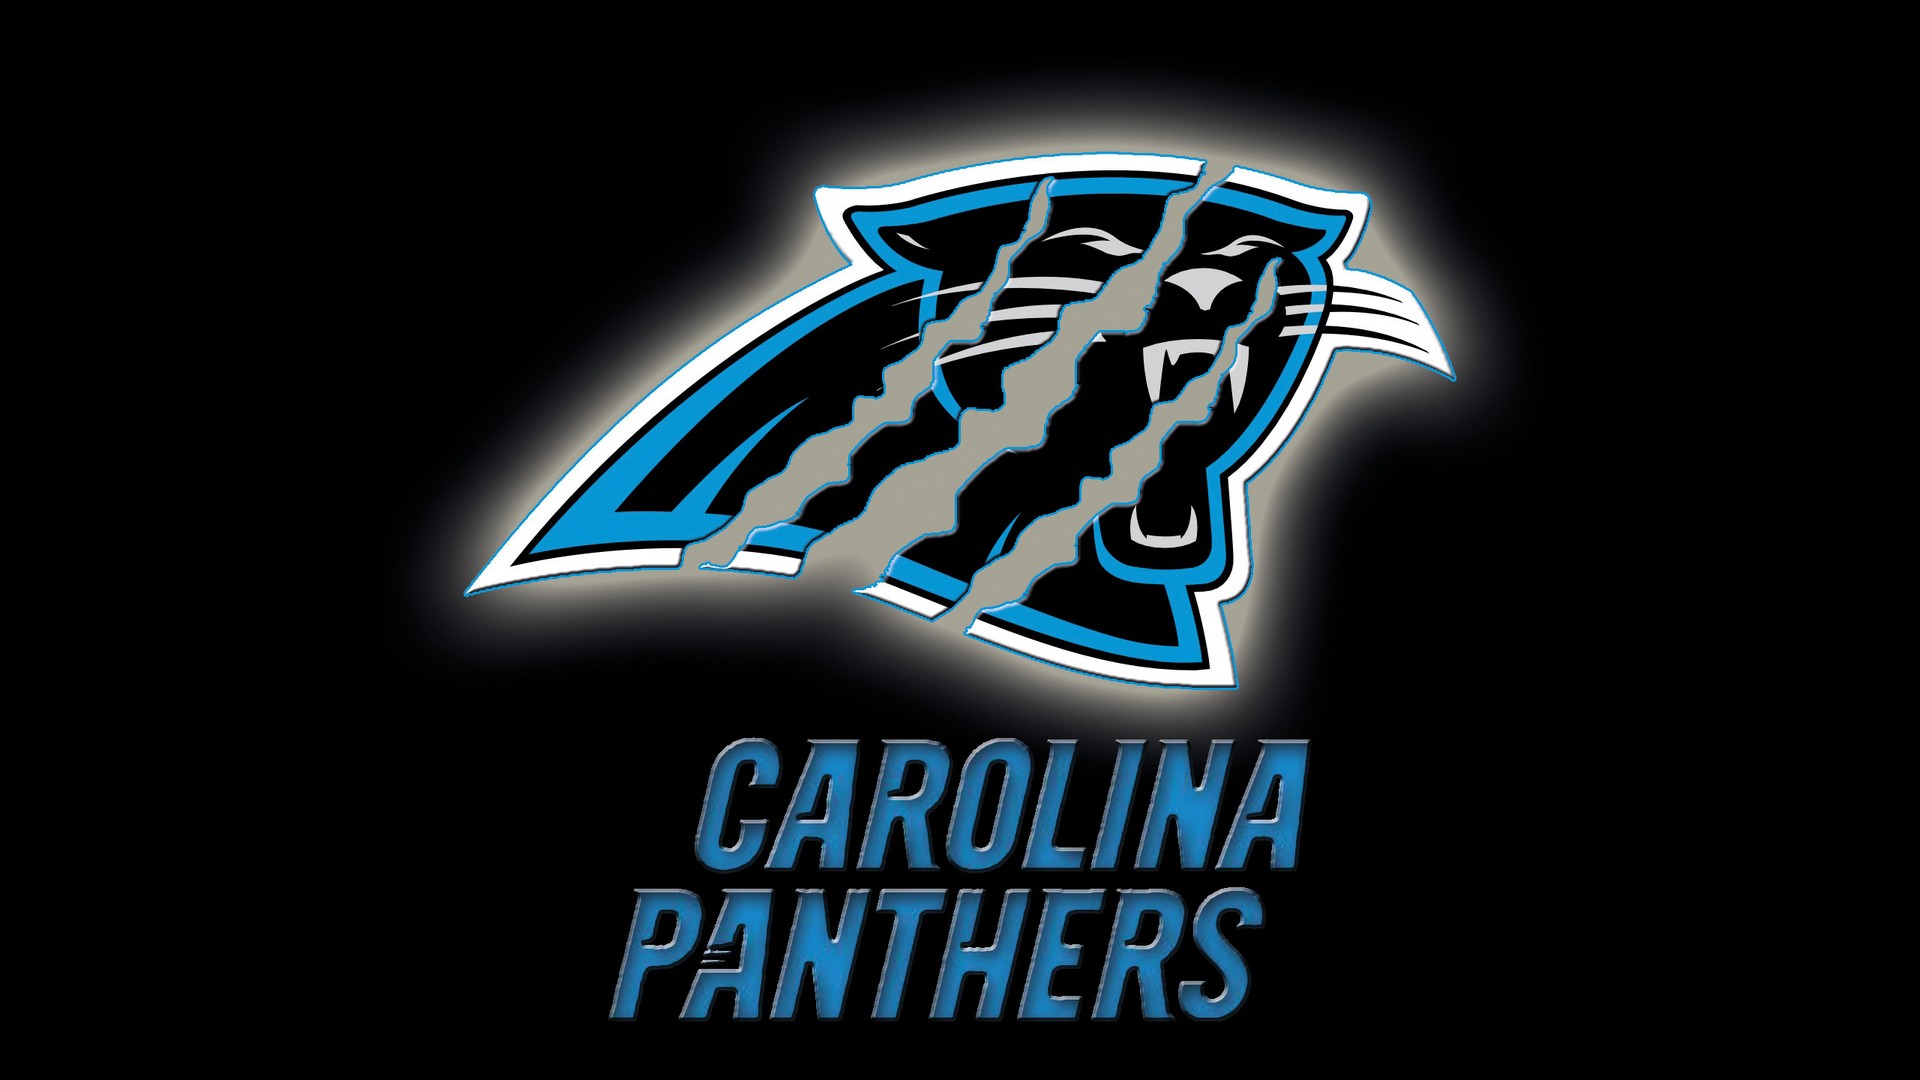 Carolina Panthers For Desktop Wallpaper 1920x1080